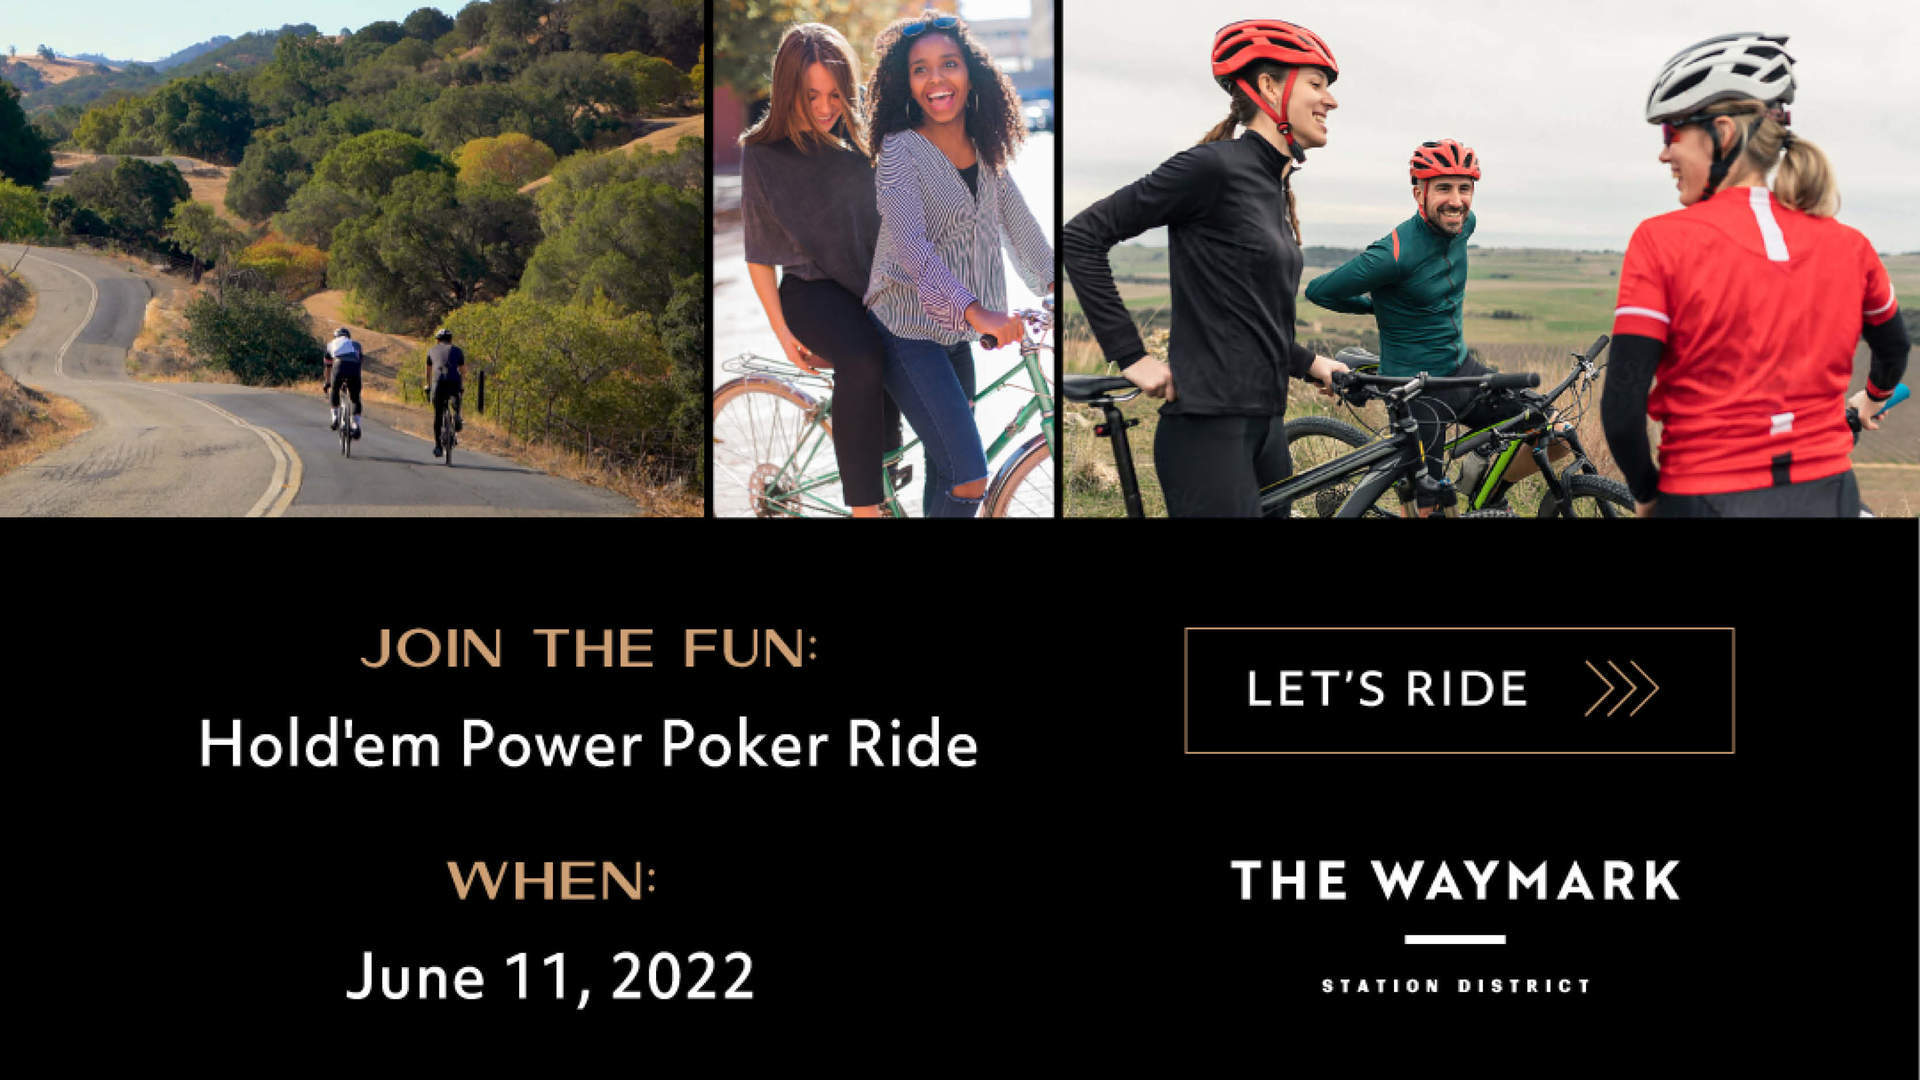 Hold'em Power Poker Ride, Walnut Creek, California, United States